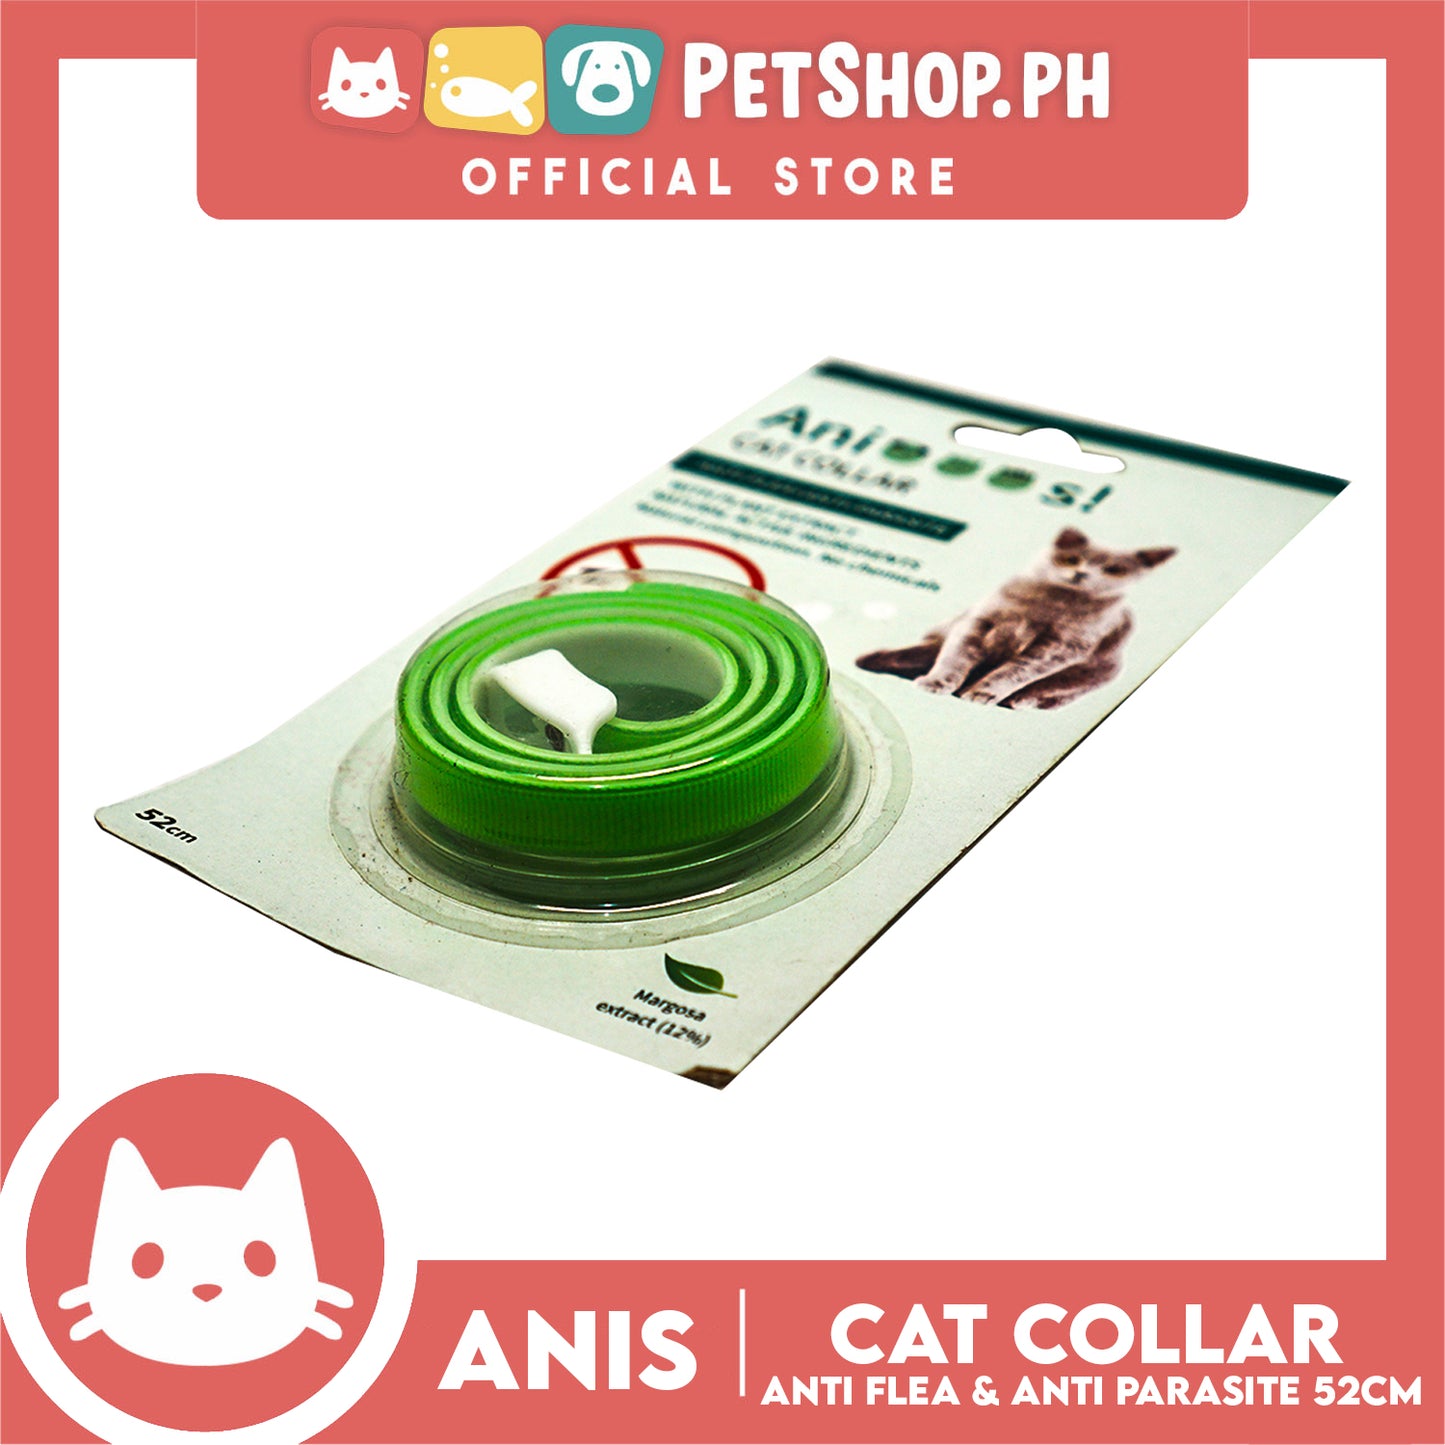 Adjustable Cat Collar Anti-Flea and Anti-Parasite 52cm with 12% Margosa Extract Flea C6713 (Green)